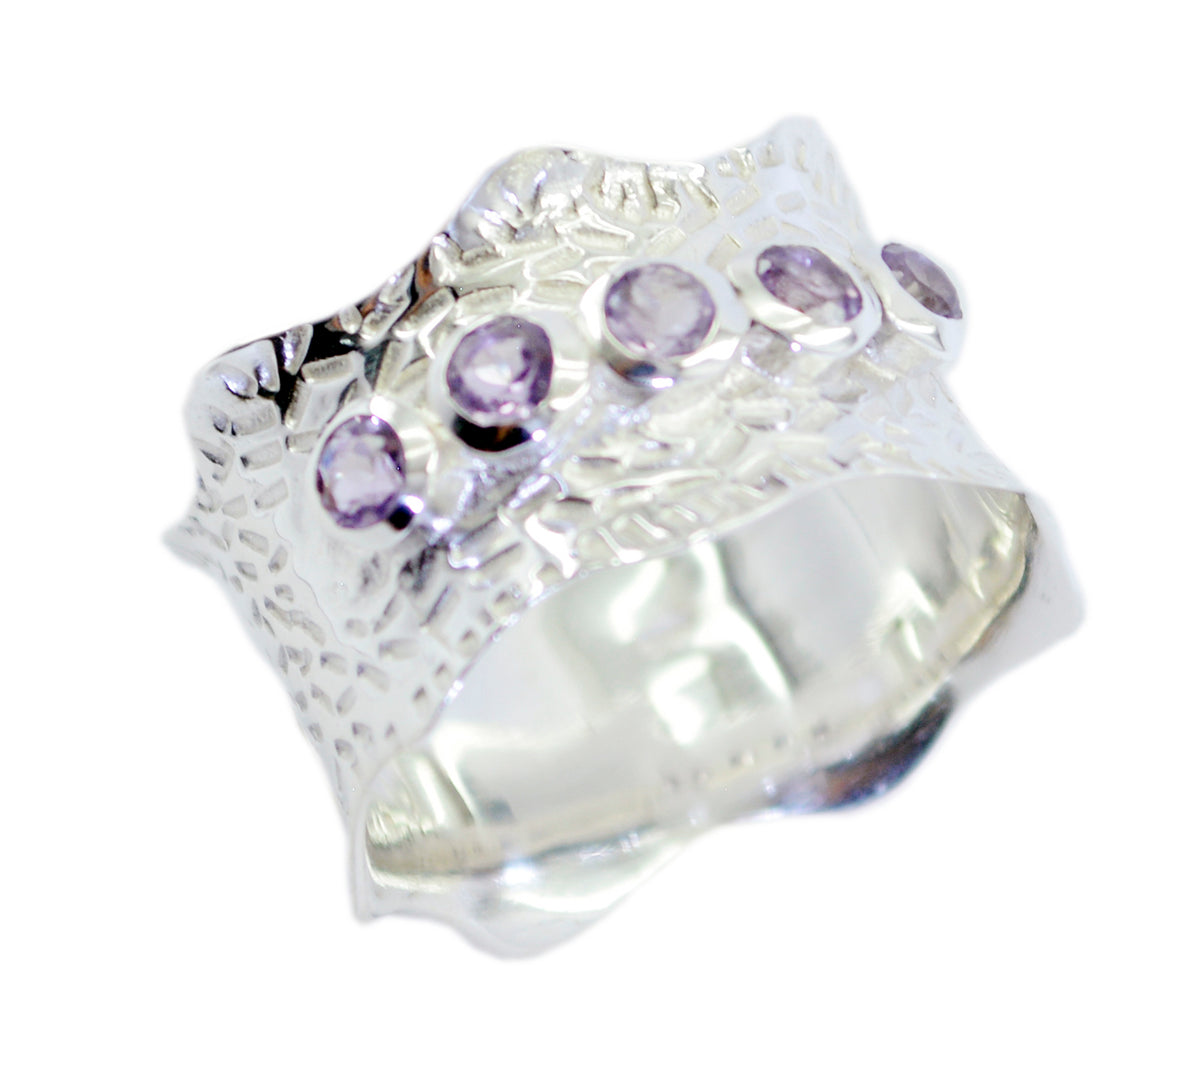 Riyo Mesmeric Gems Amethyst 925 Silver Ring Contemporary Jewelry